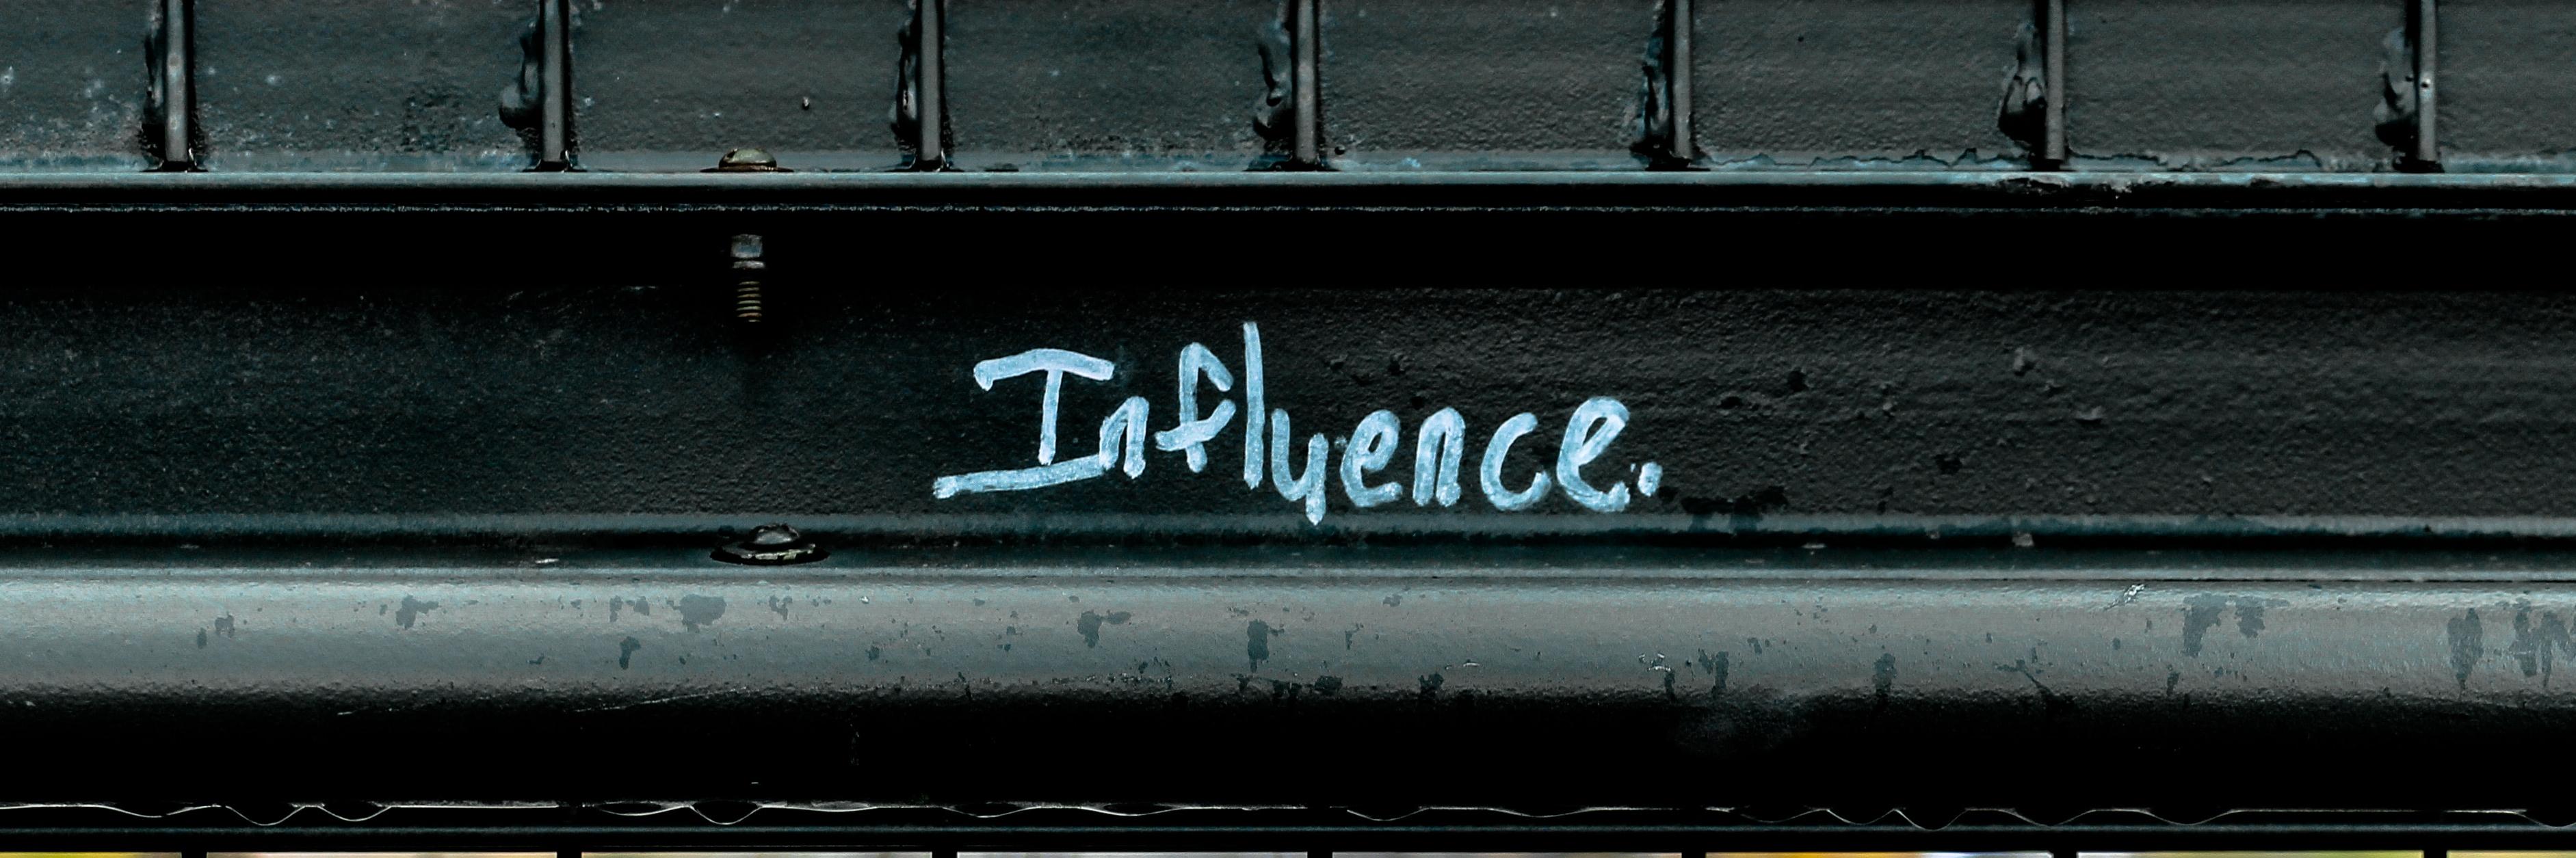 influence